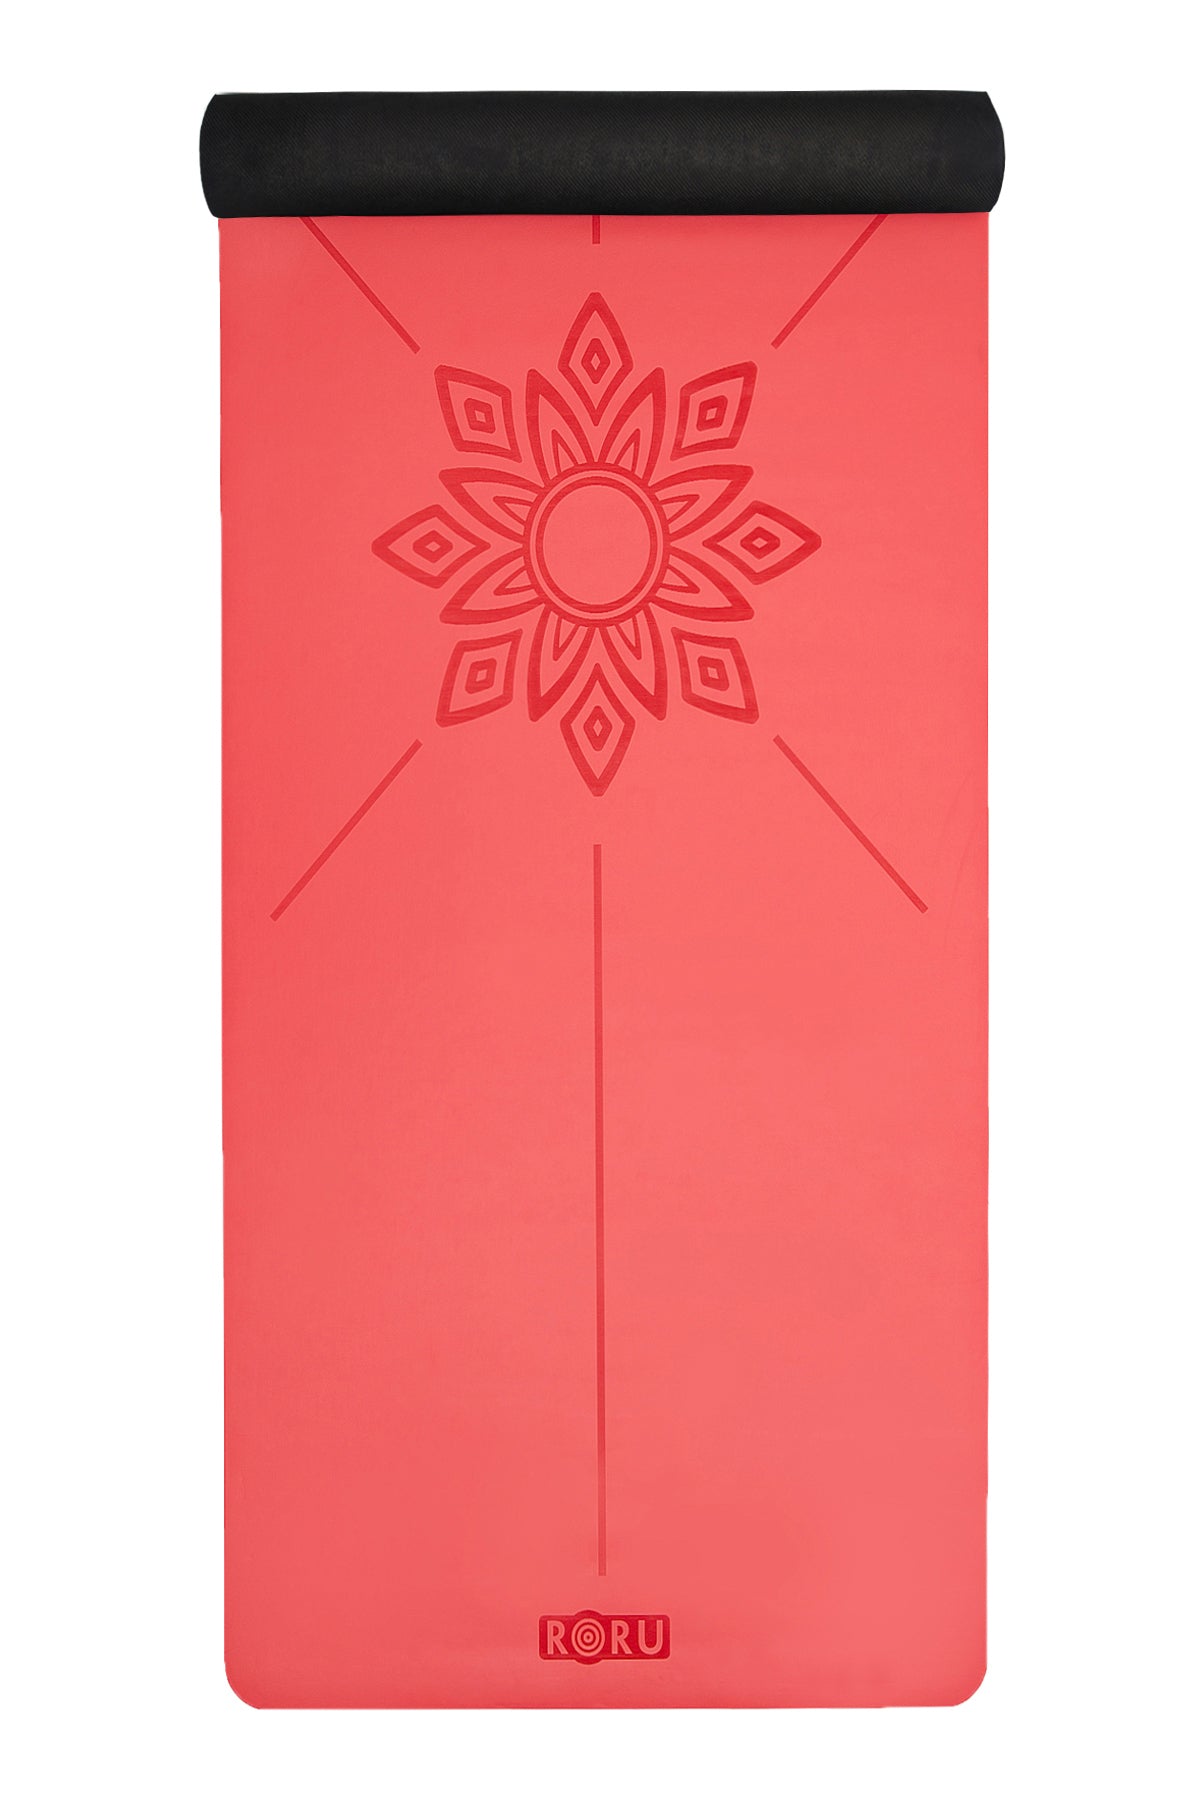 RORU Concept Sun Series Profesyonel Seyahat Yoga Matı 2.5mm